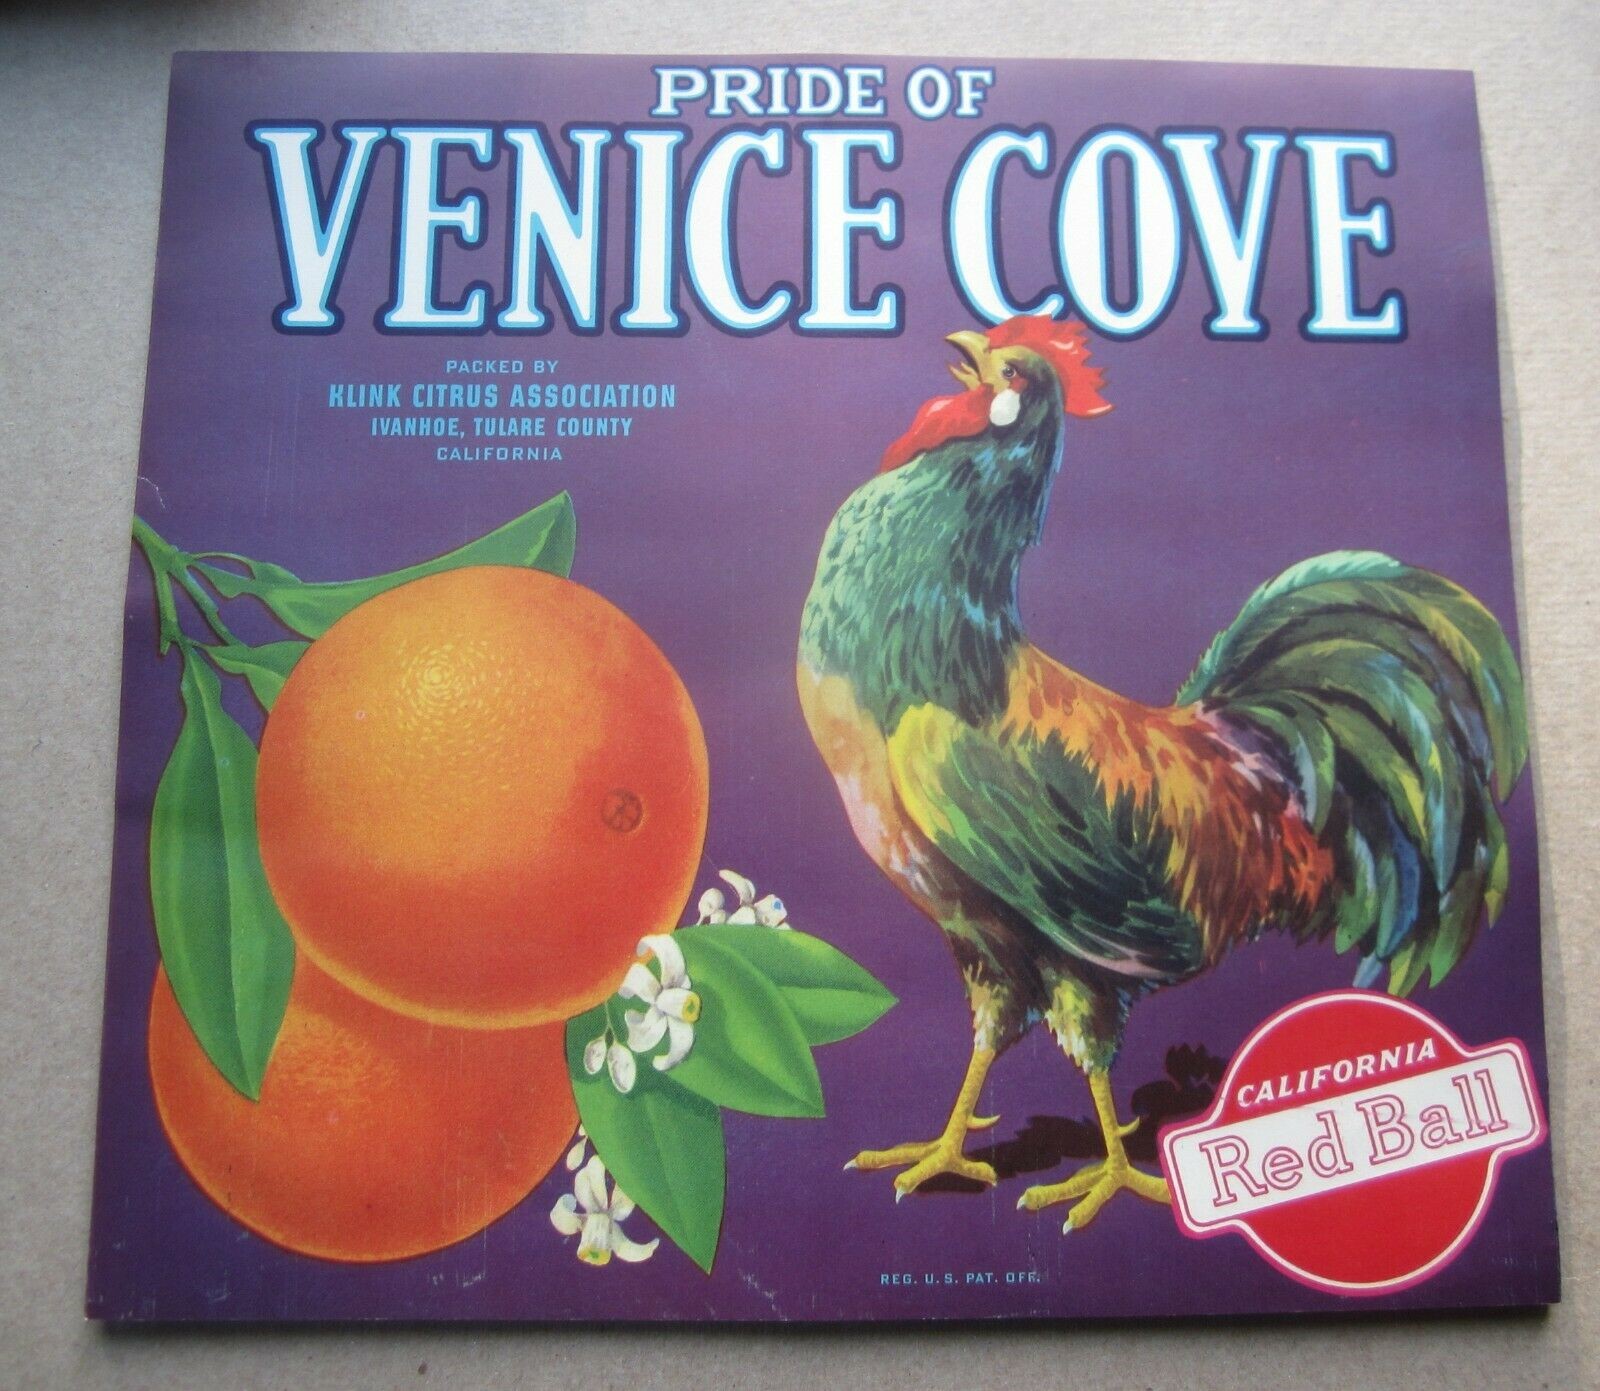  Lot of 50 Old Vintage - VENICE COVE - ORANGE L...